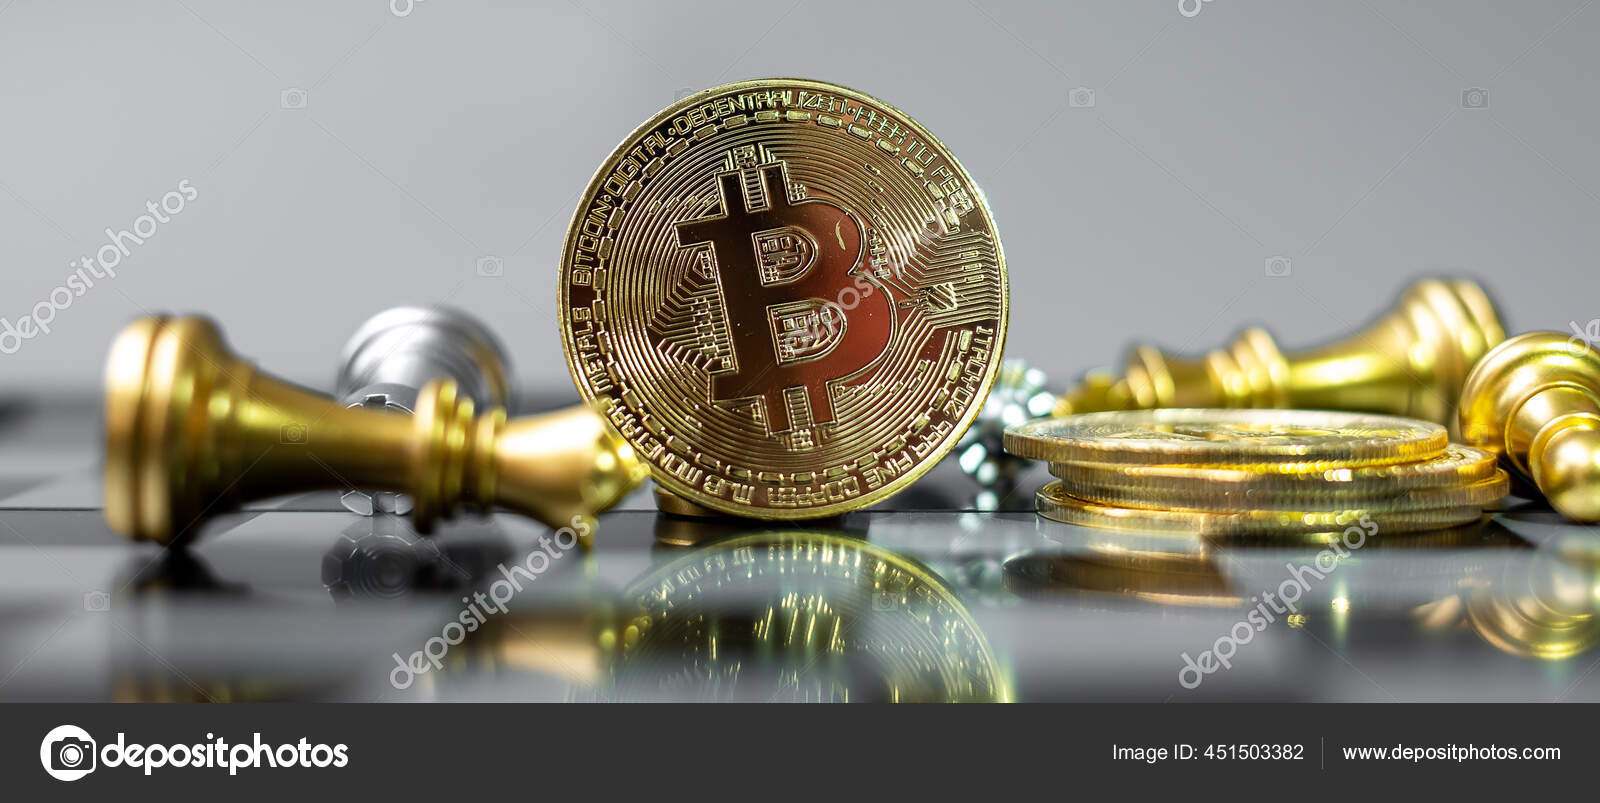 Emas Bitcoin Cryptocurrency Koin Stack Dan Potongan Catur Papan Catur Stok Foto Editorial C Jopanuwatd 451503382